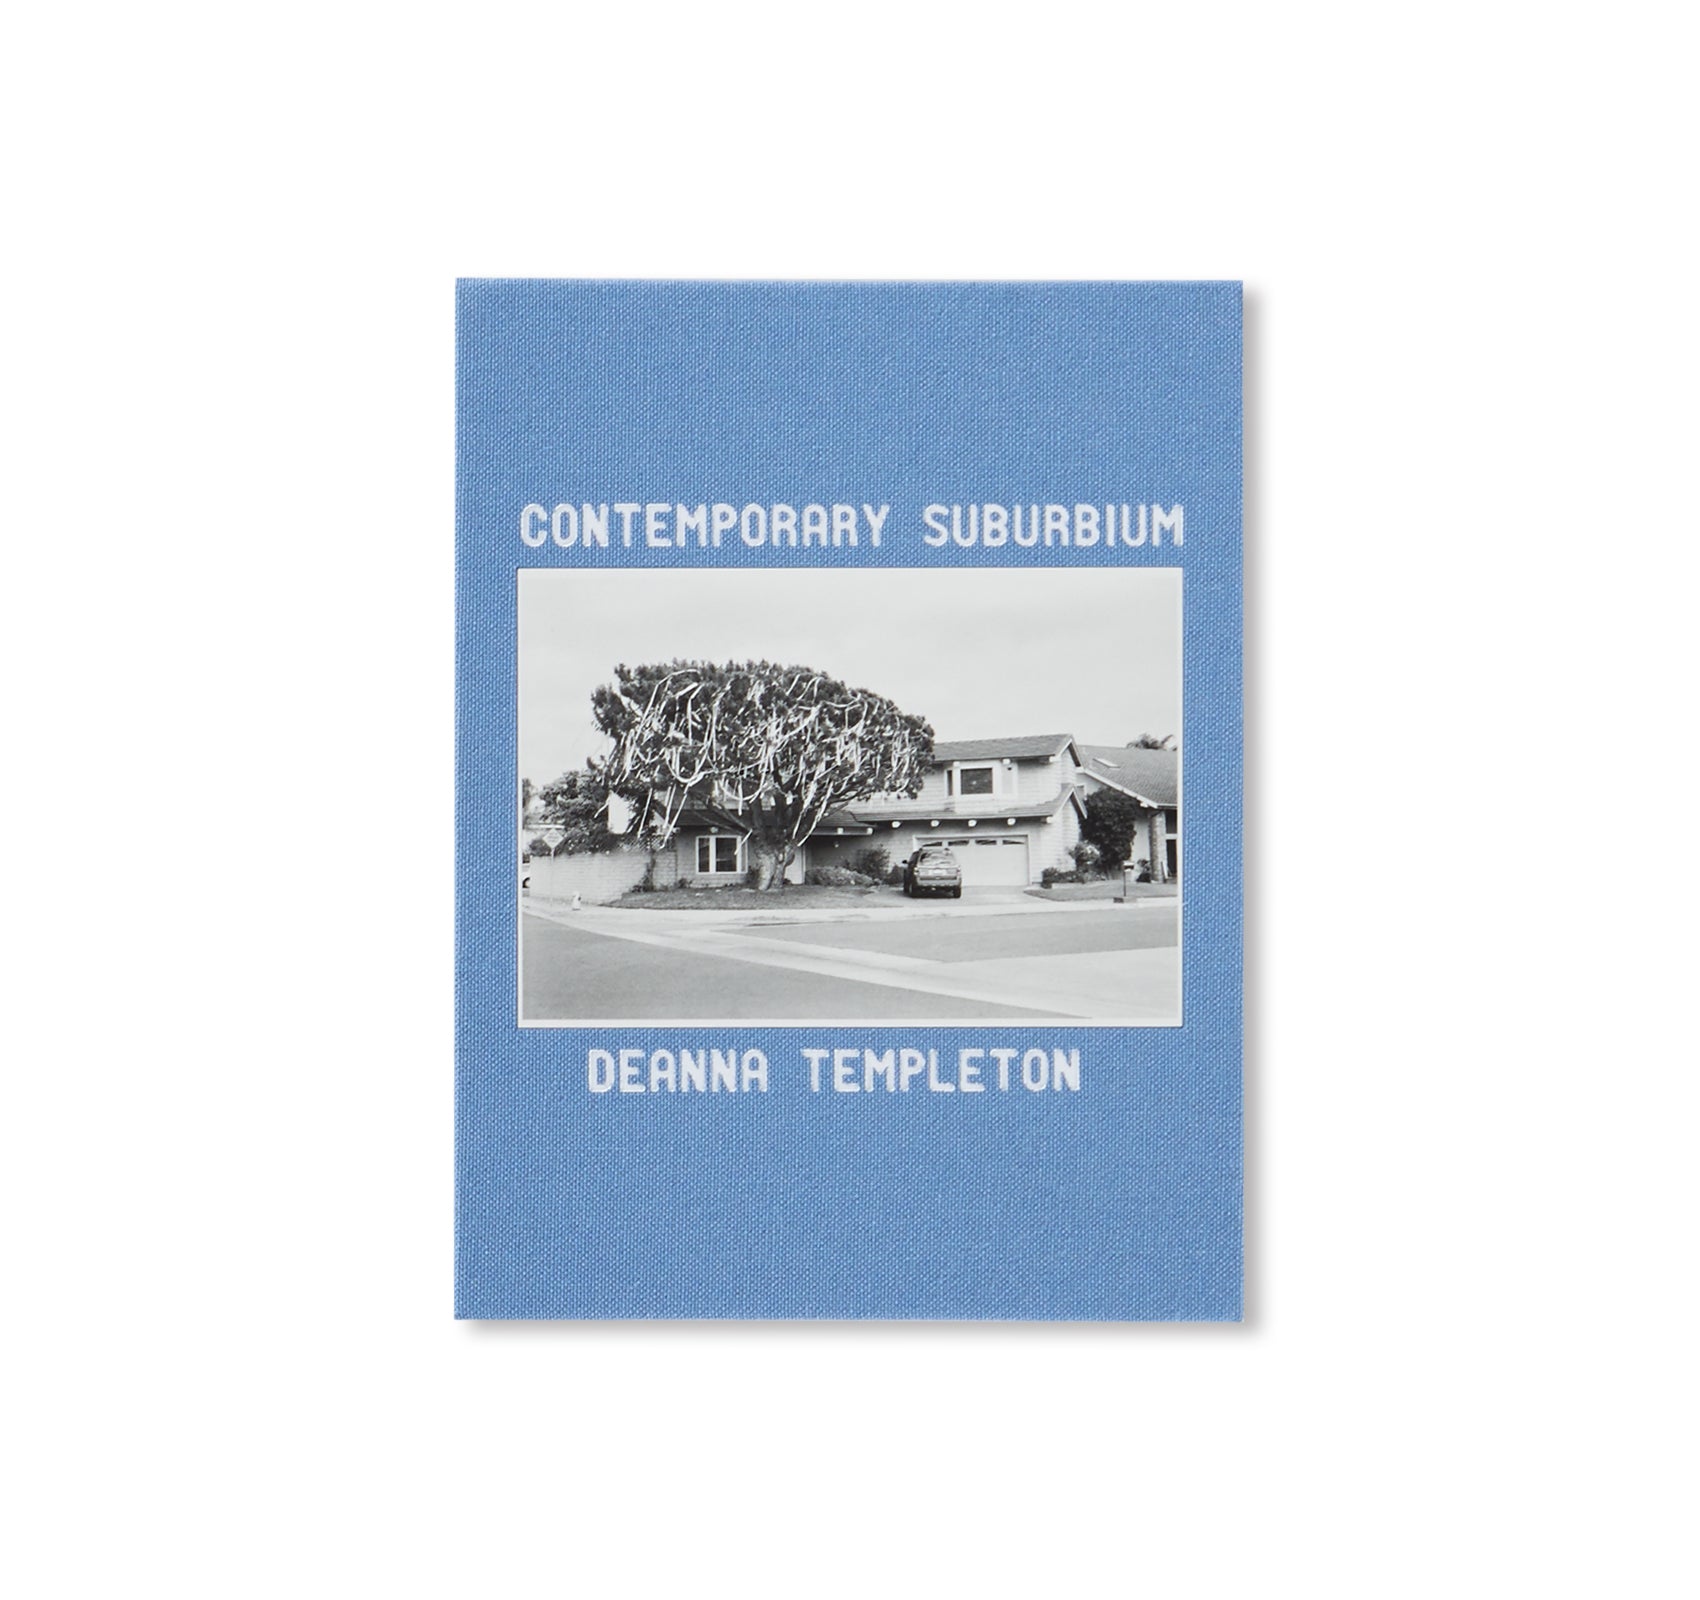 CONTEMPORARY SUBURBIUM by Ed & Deanna Templeton